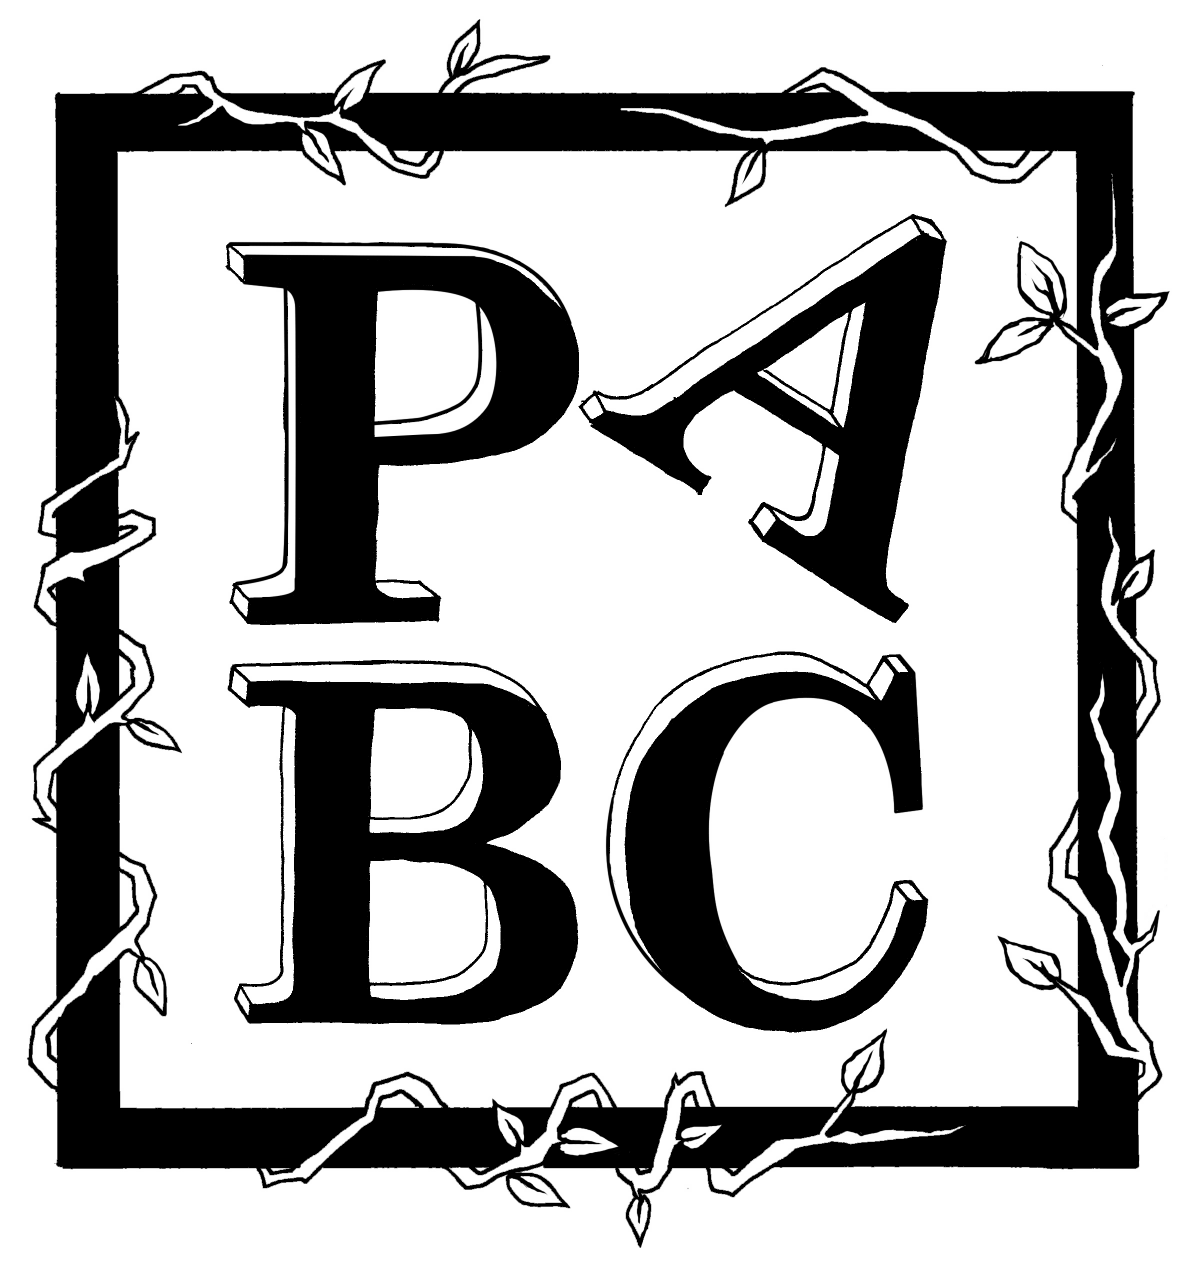 pabc-logo.png